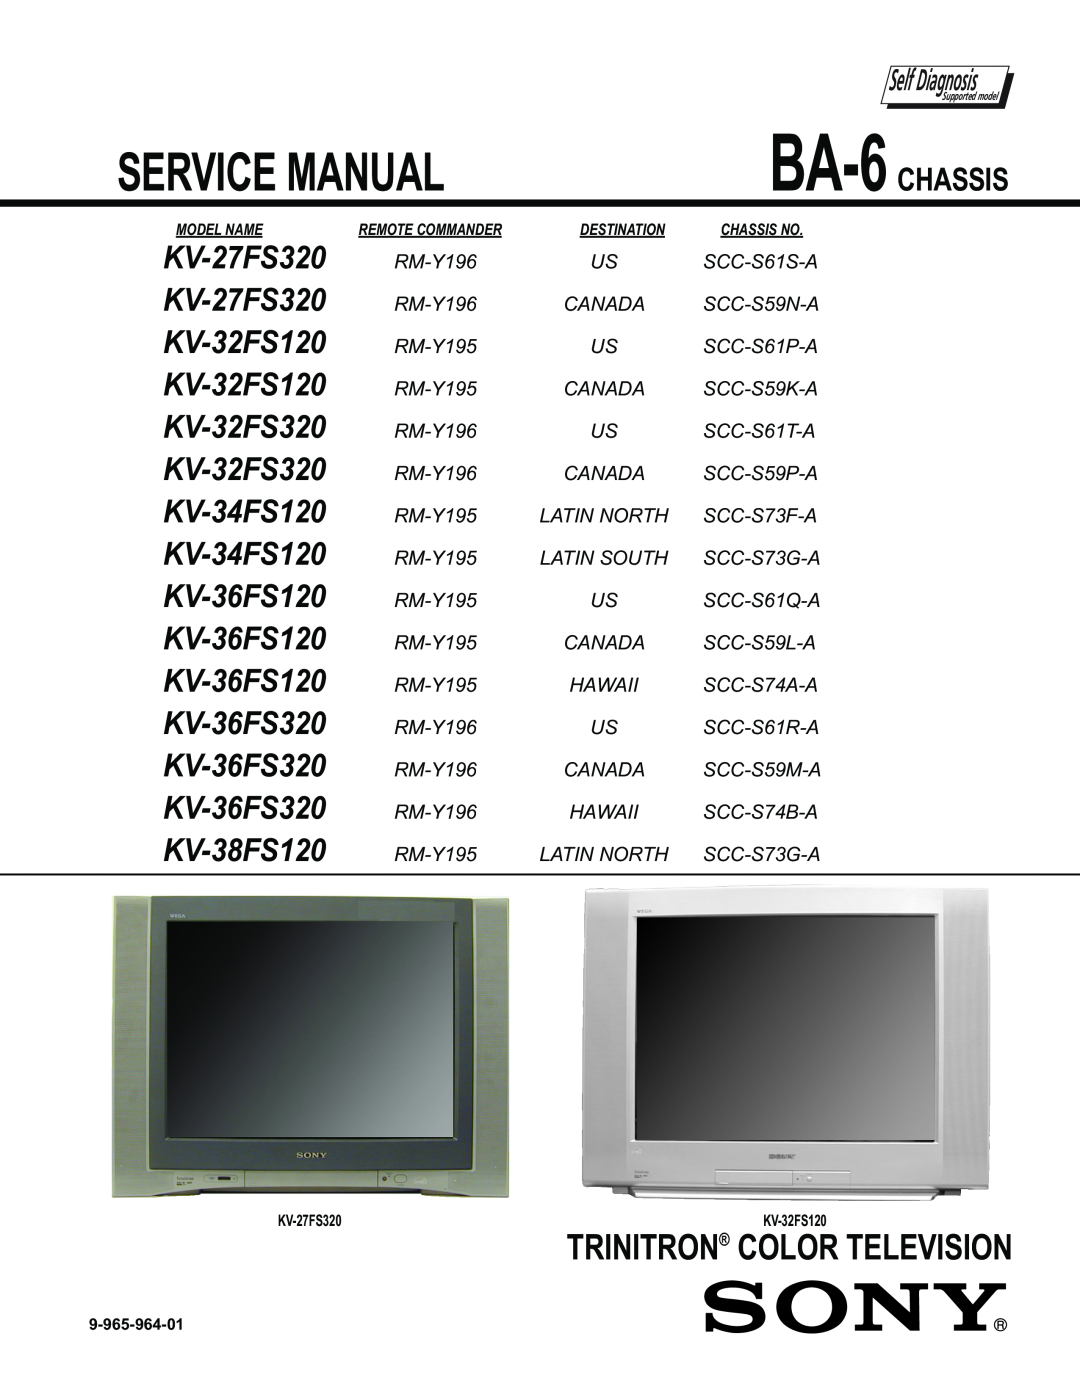 Sony KV-27FS320, KV-32FS320 service manual Service Manual, Trinitron Color Television, Self Diagnosis, BA-6 CHASSIS 